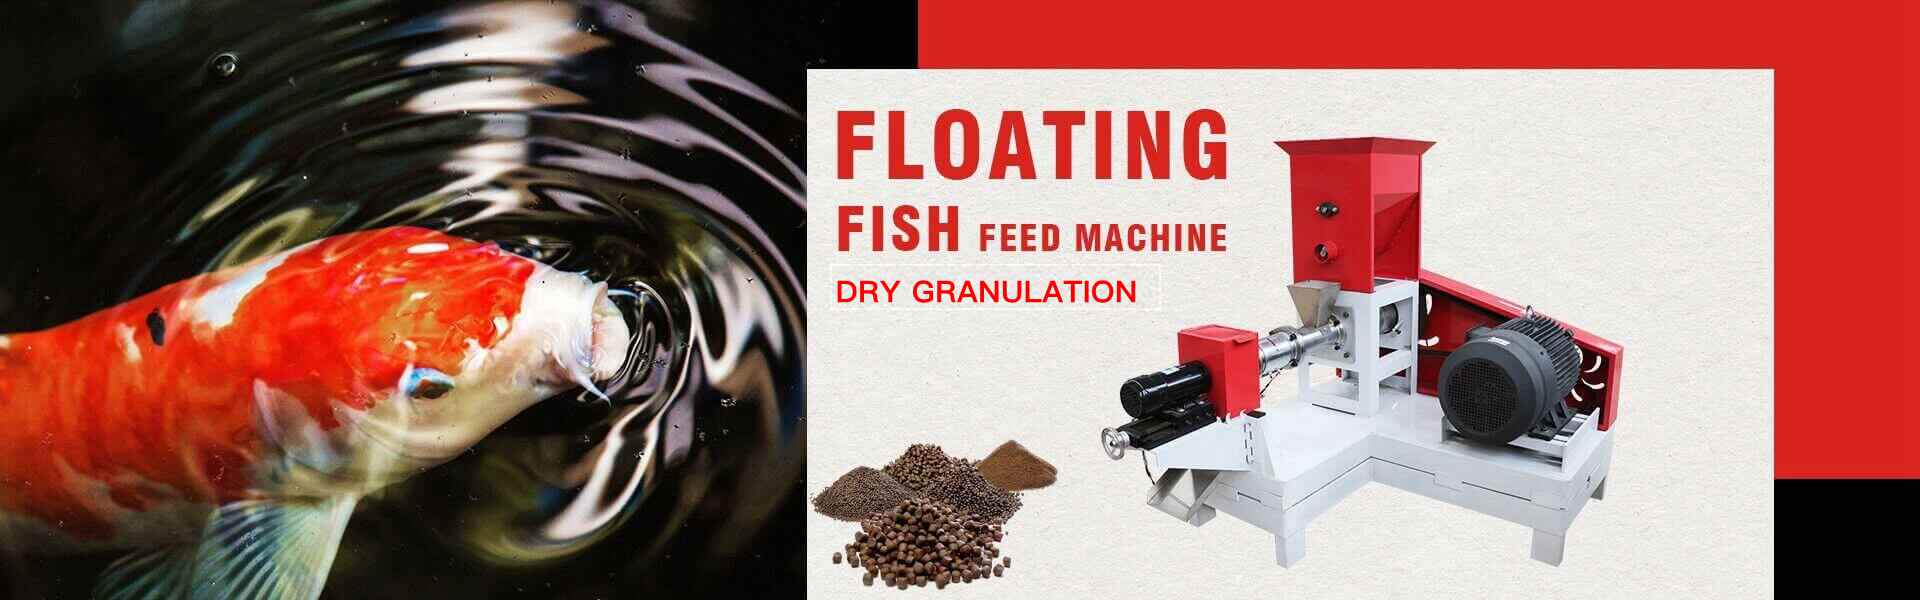 Floating-fishi-feed-machine-Dry-granulation.jpg